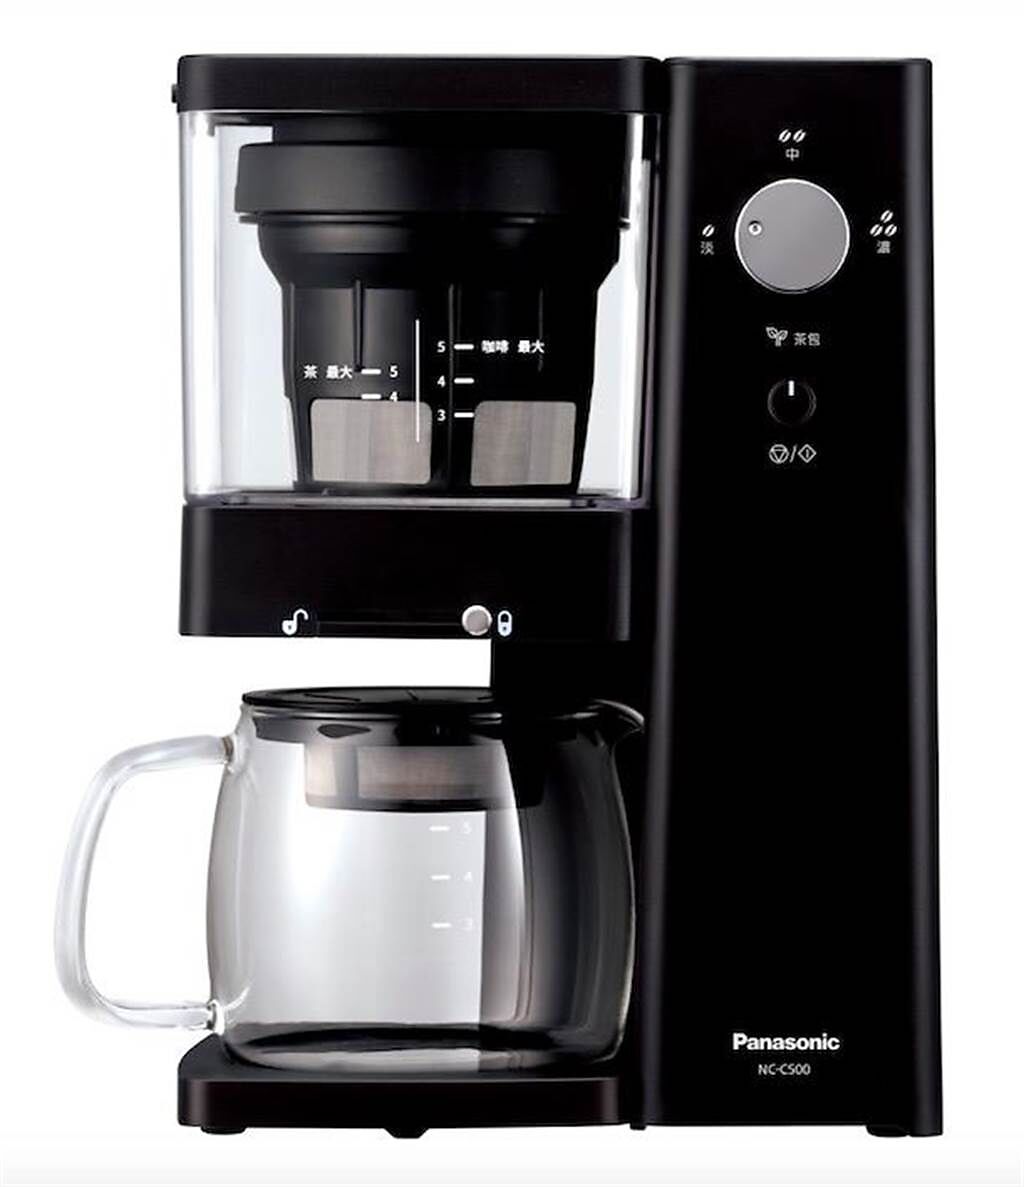 Panasonic冷萃咖啡機NC-C500，8月17日前買就送手動研磨器組。（Panasonic提供）